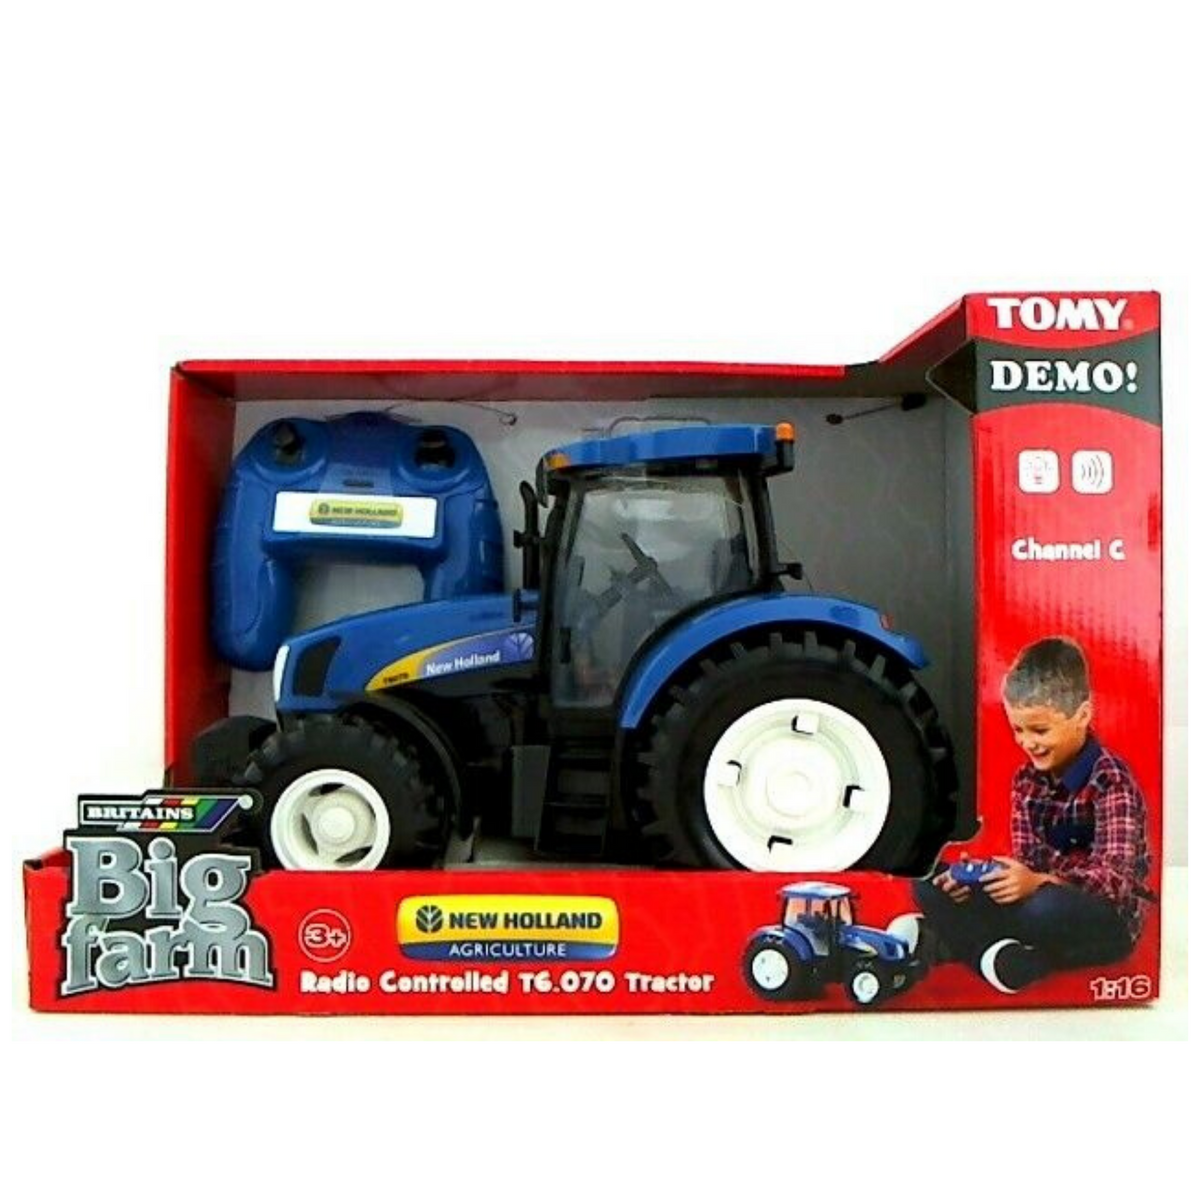 big farm remote control tractor